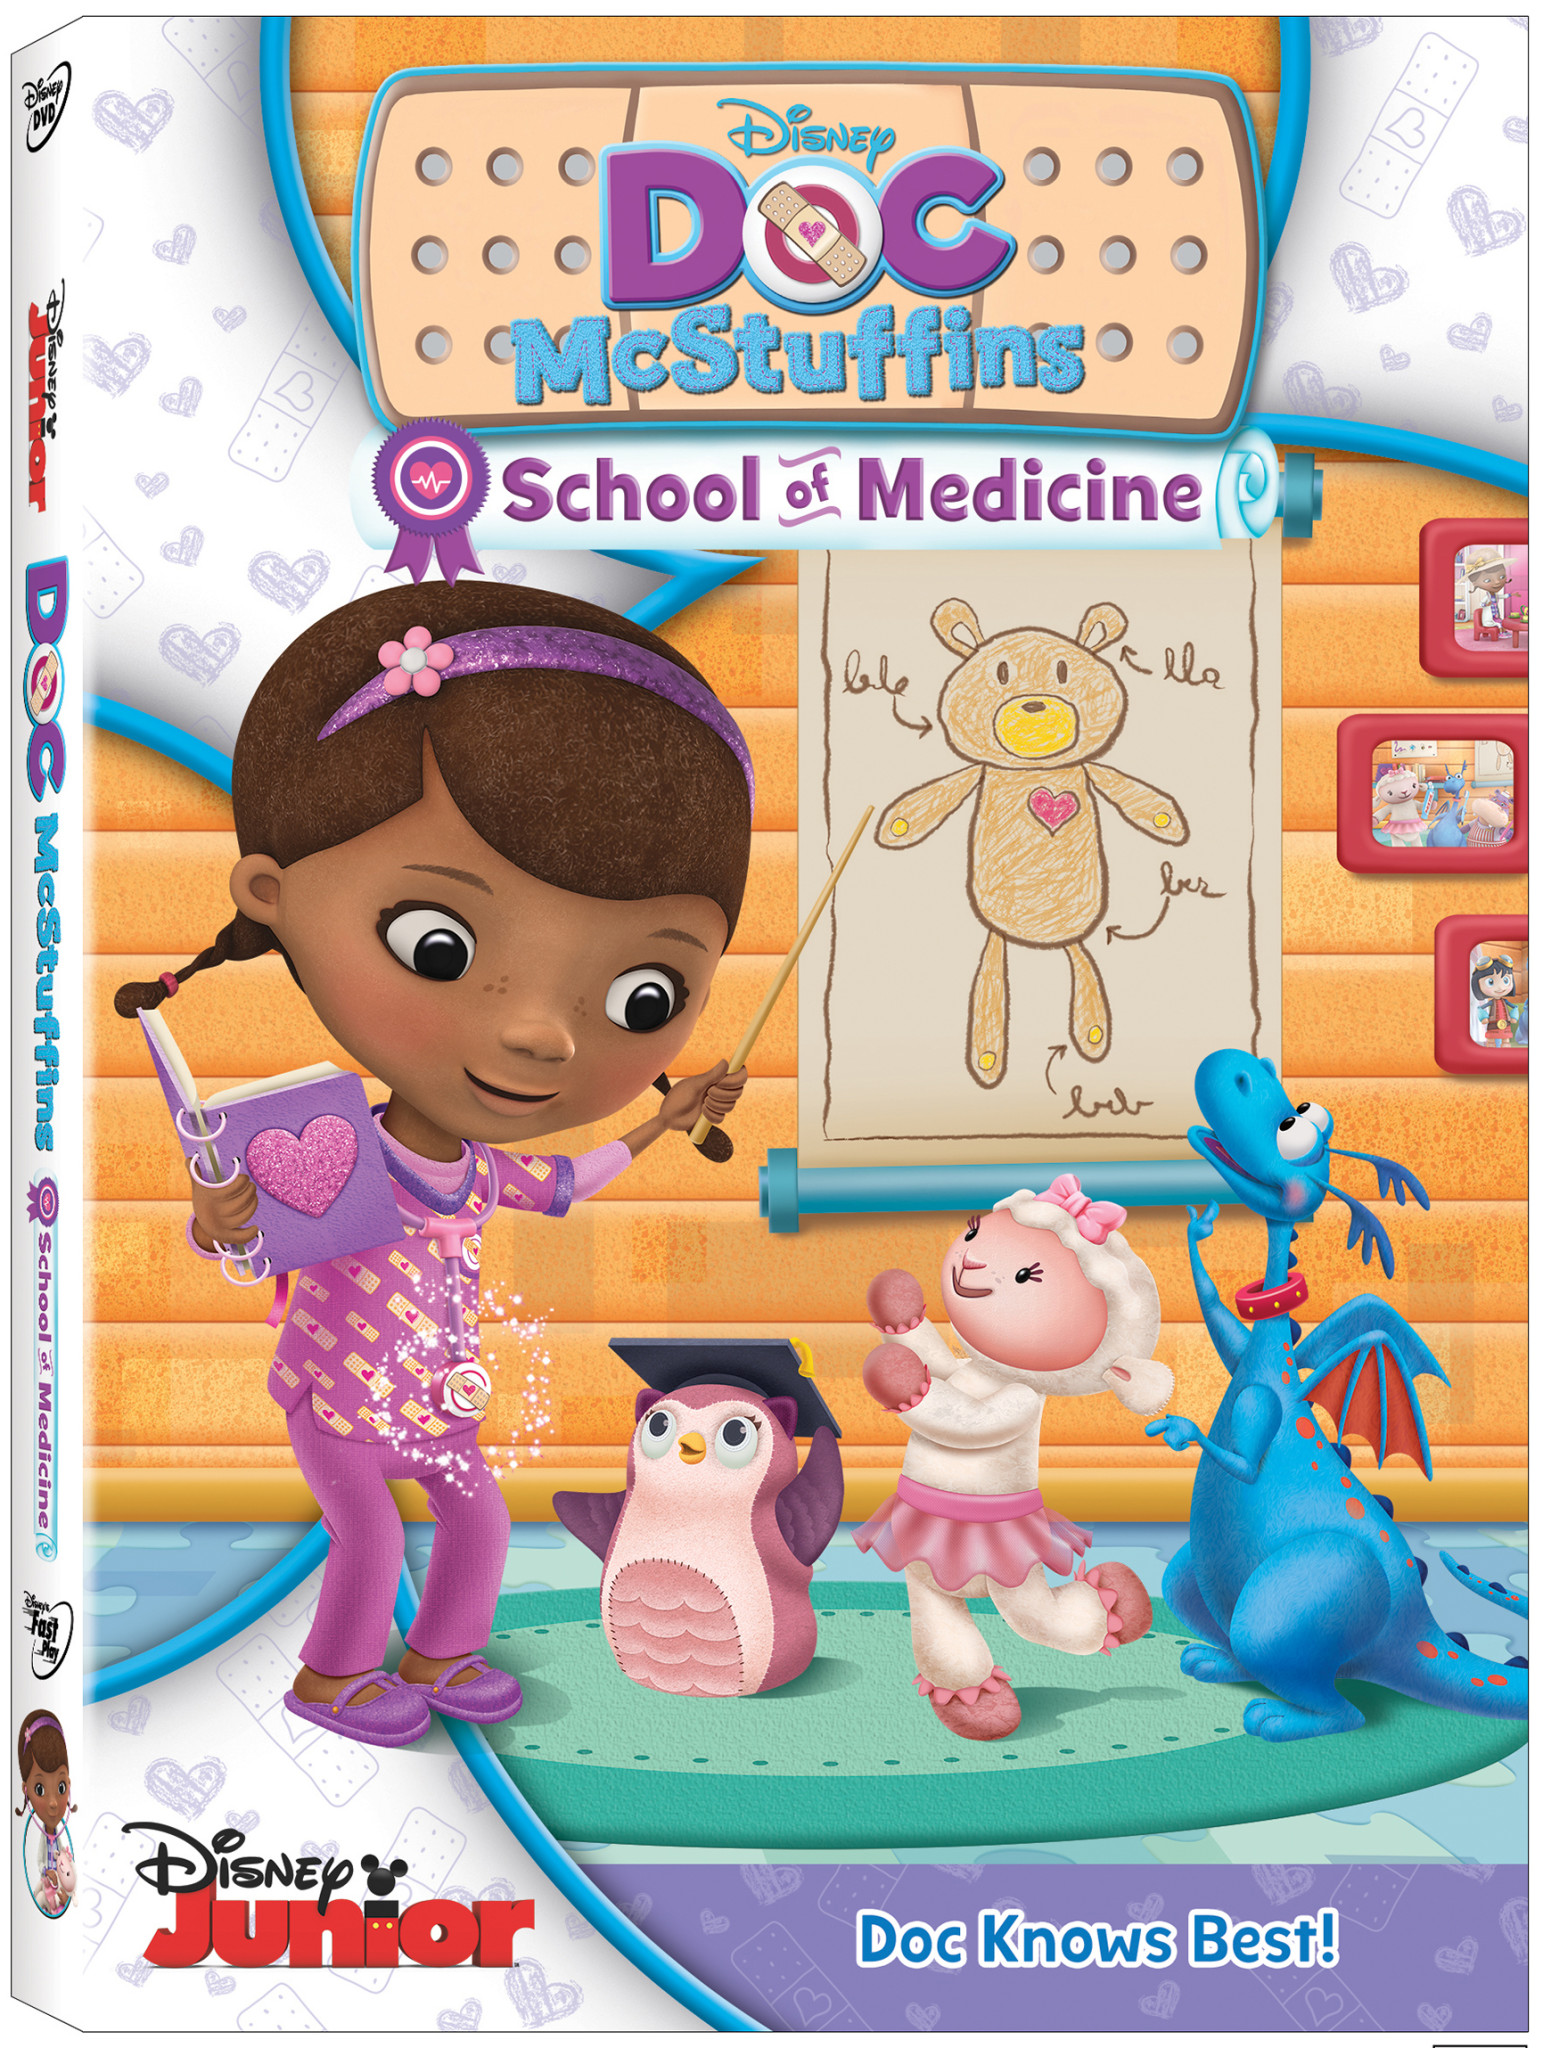 New on DVD, Doc McStuffins: School of Medicine